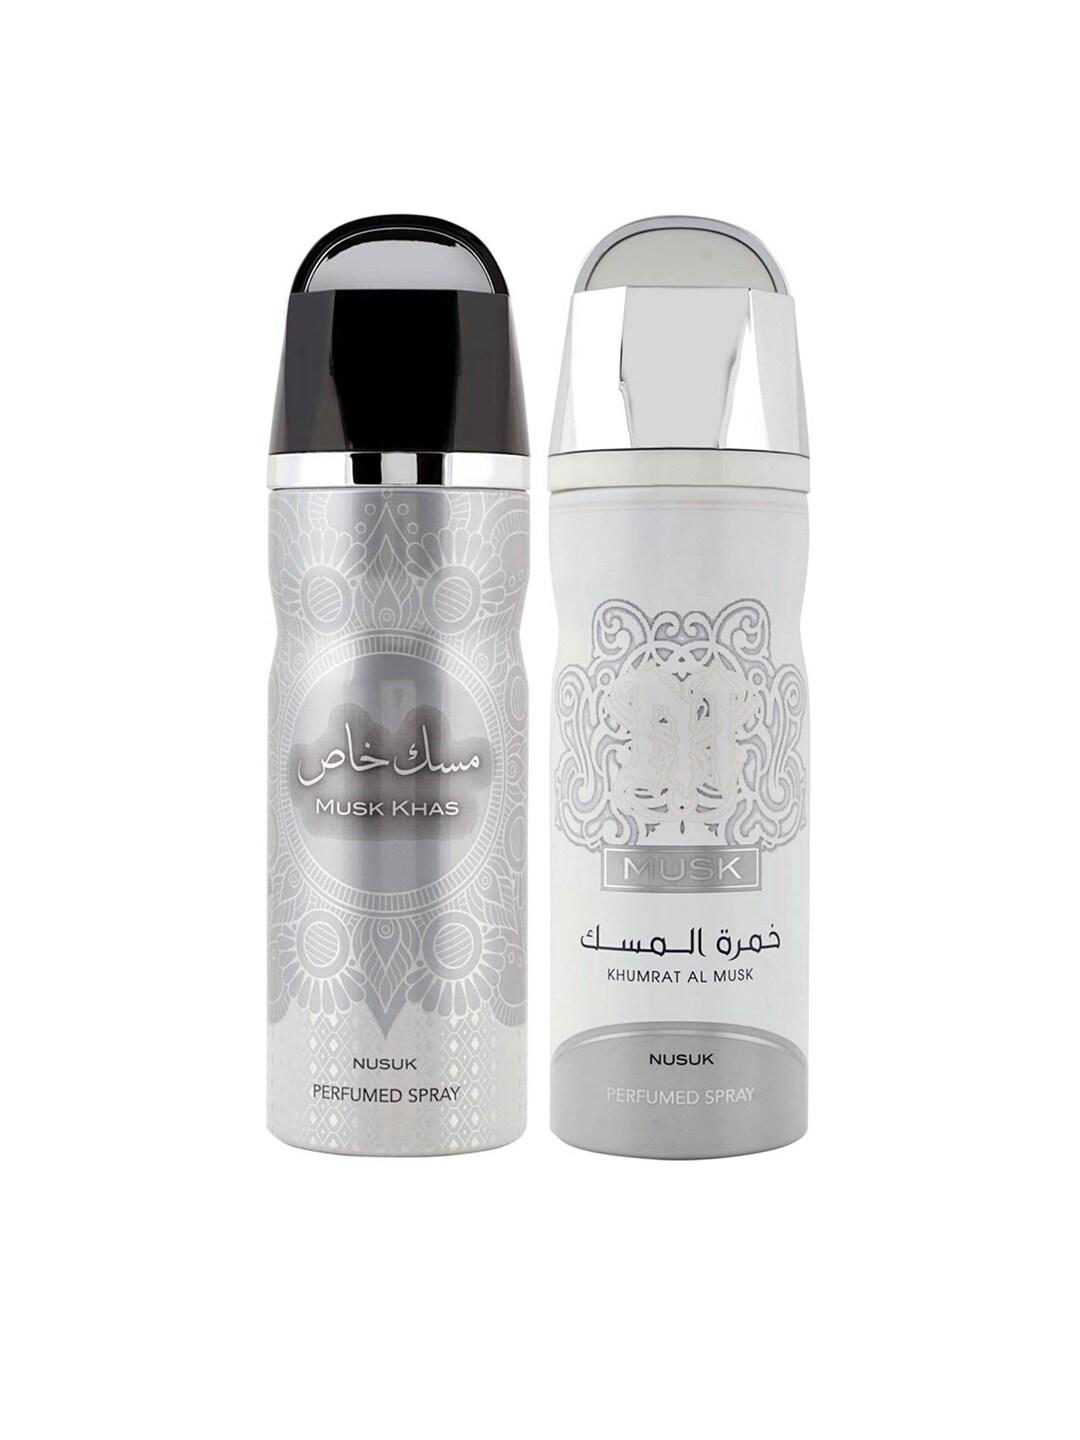 NUSUK Set of 2 Premium Deodorants- Musk Khas & Khumrat Al Musk - 200ml Each